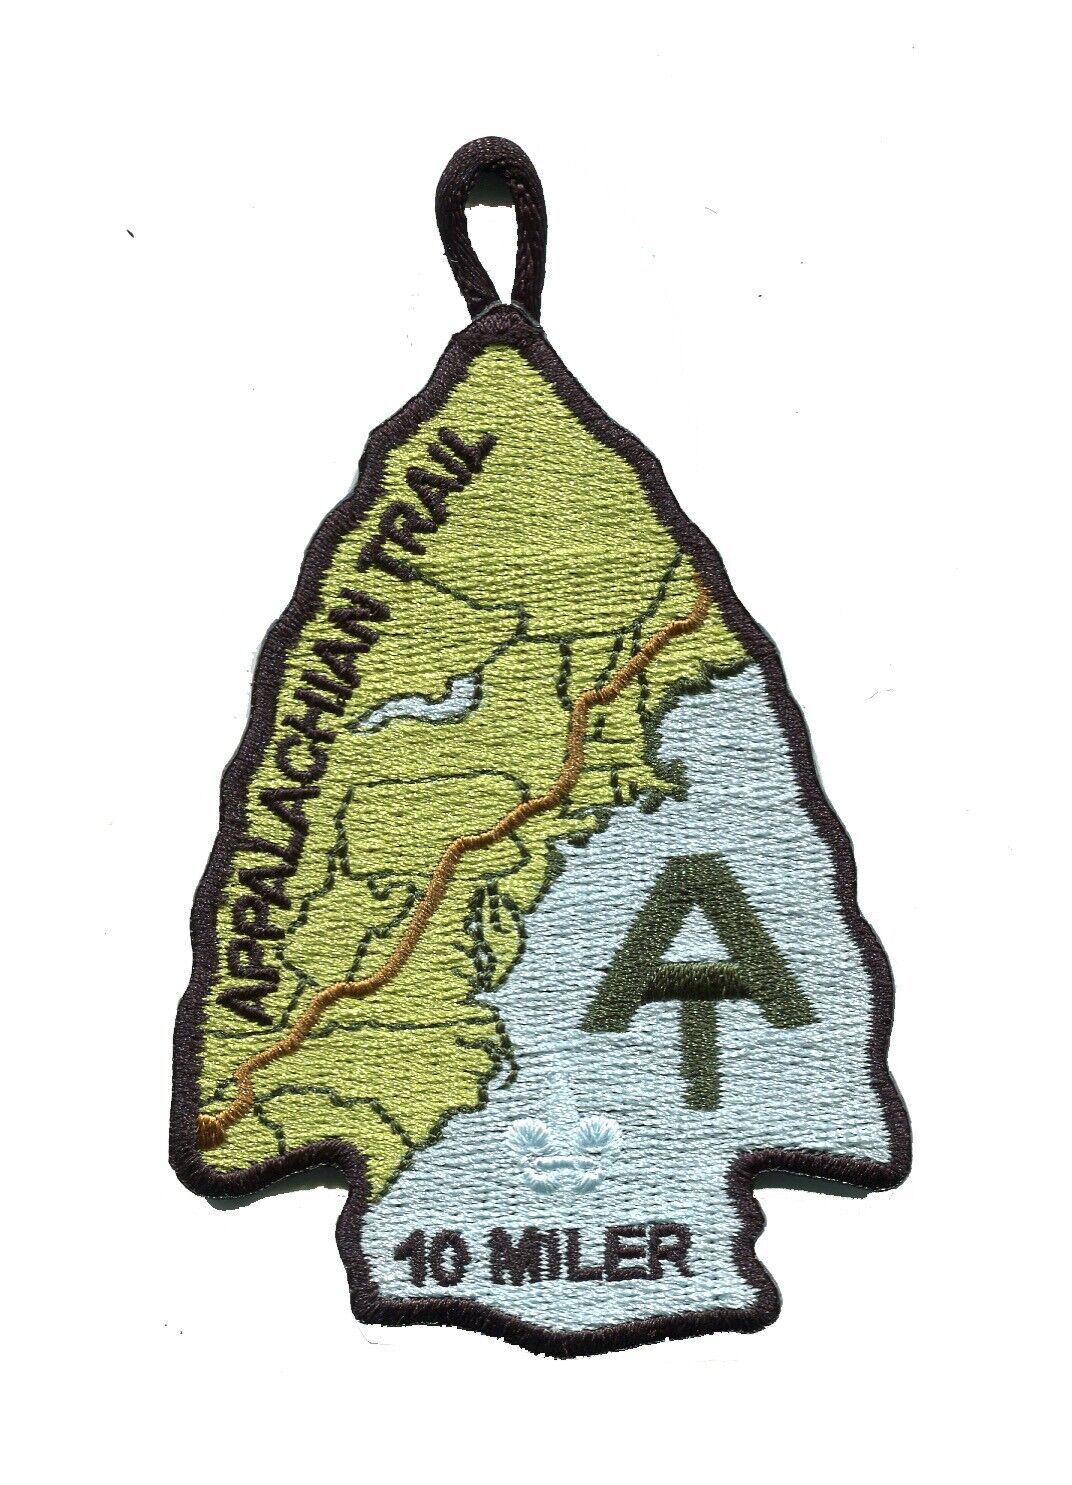 Appalachian Trail Patch - Mileage Accomplishment Patch - Choose 10,20, 30 ..100